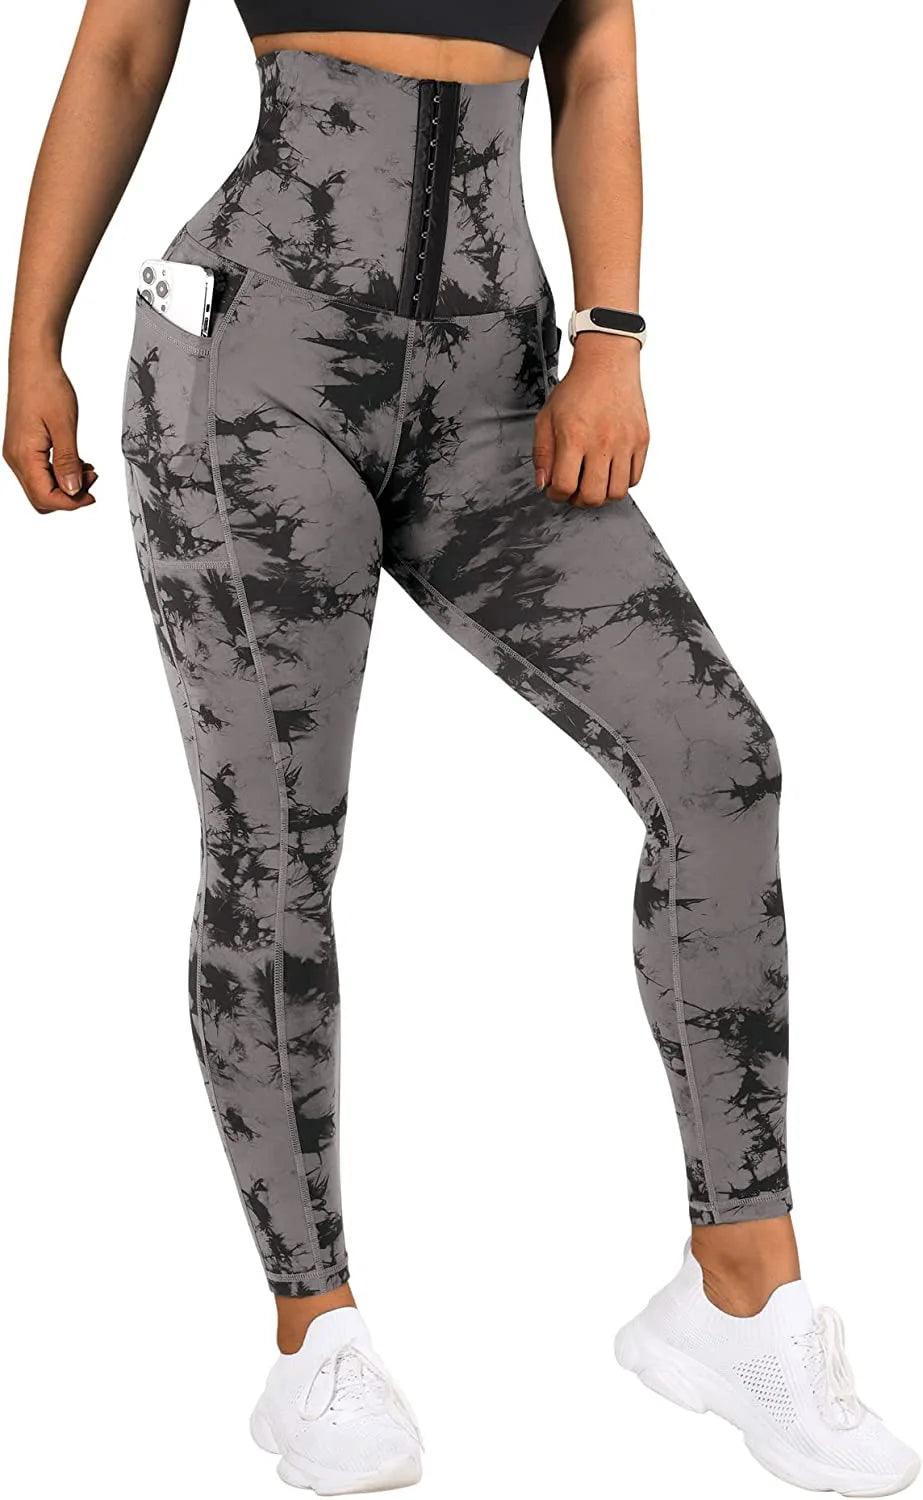 Trendy Gradient Tie Dye Leggings with Pockets for Women - Stylish Yoga Pants  ourlum.com   